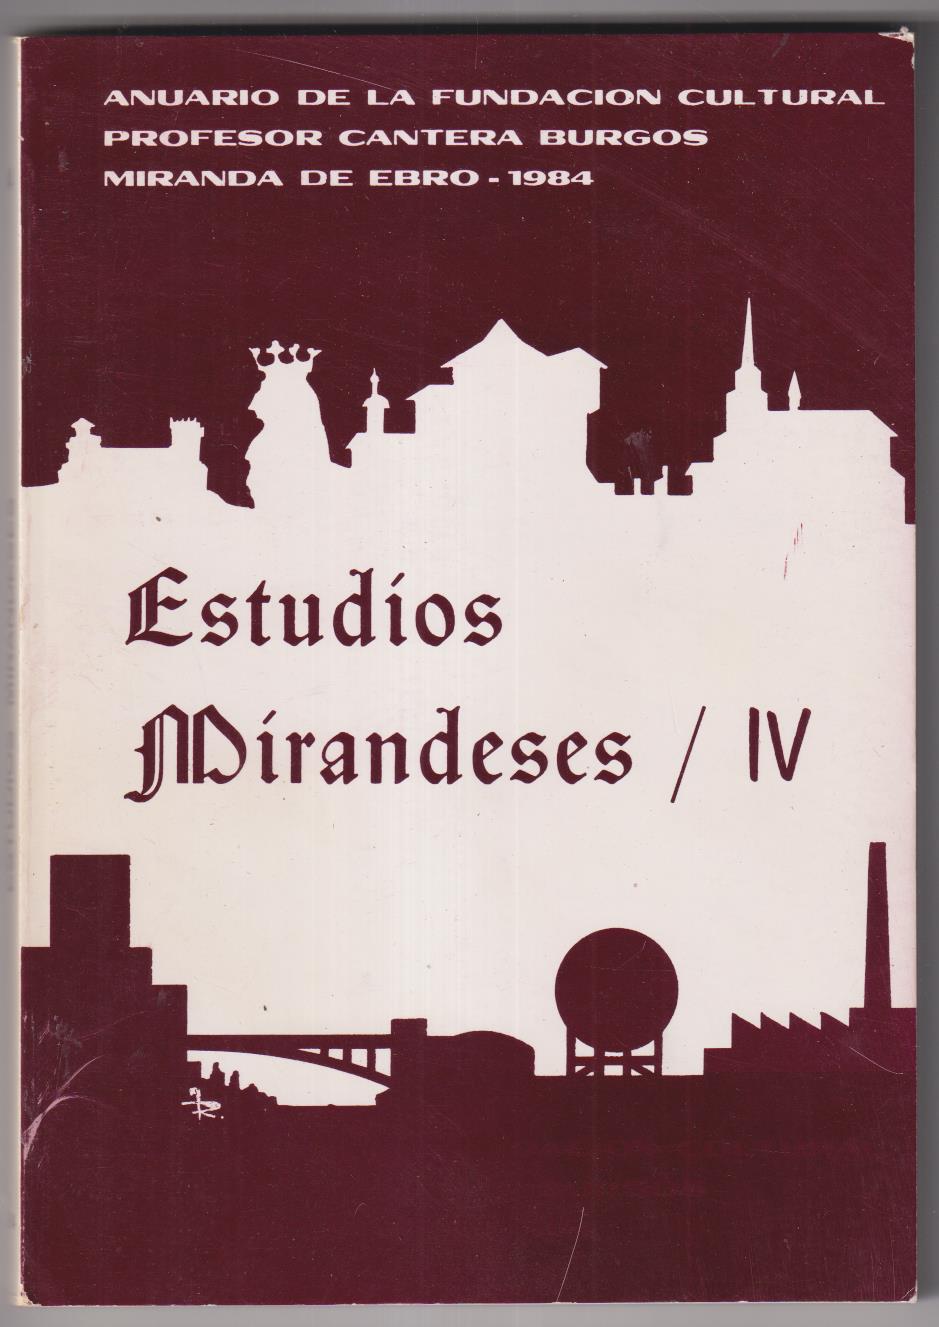 Estudios Mirandeses IV. Miranda de Ebro 1985